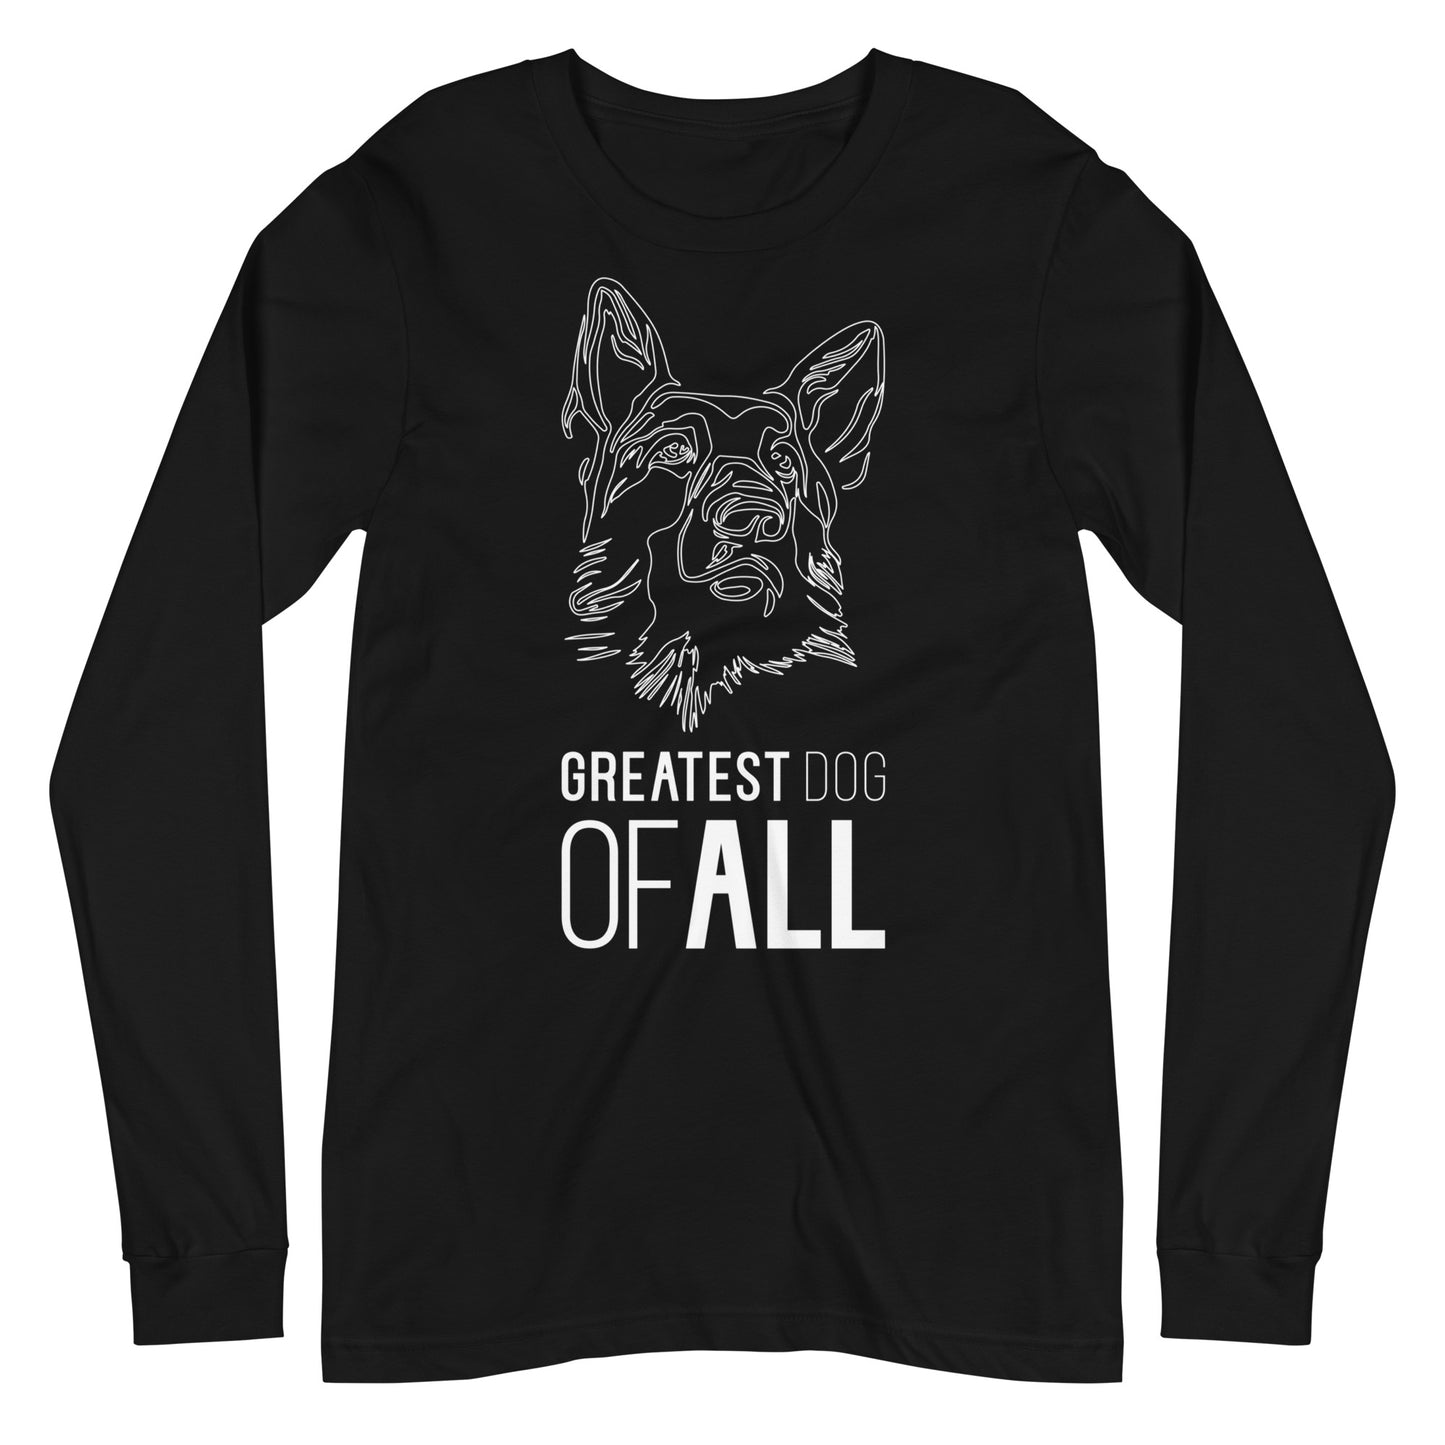 White line German Shepherd face with Greatest Dog of All caption on unisex black long sleeve t-shirt